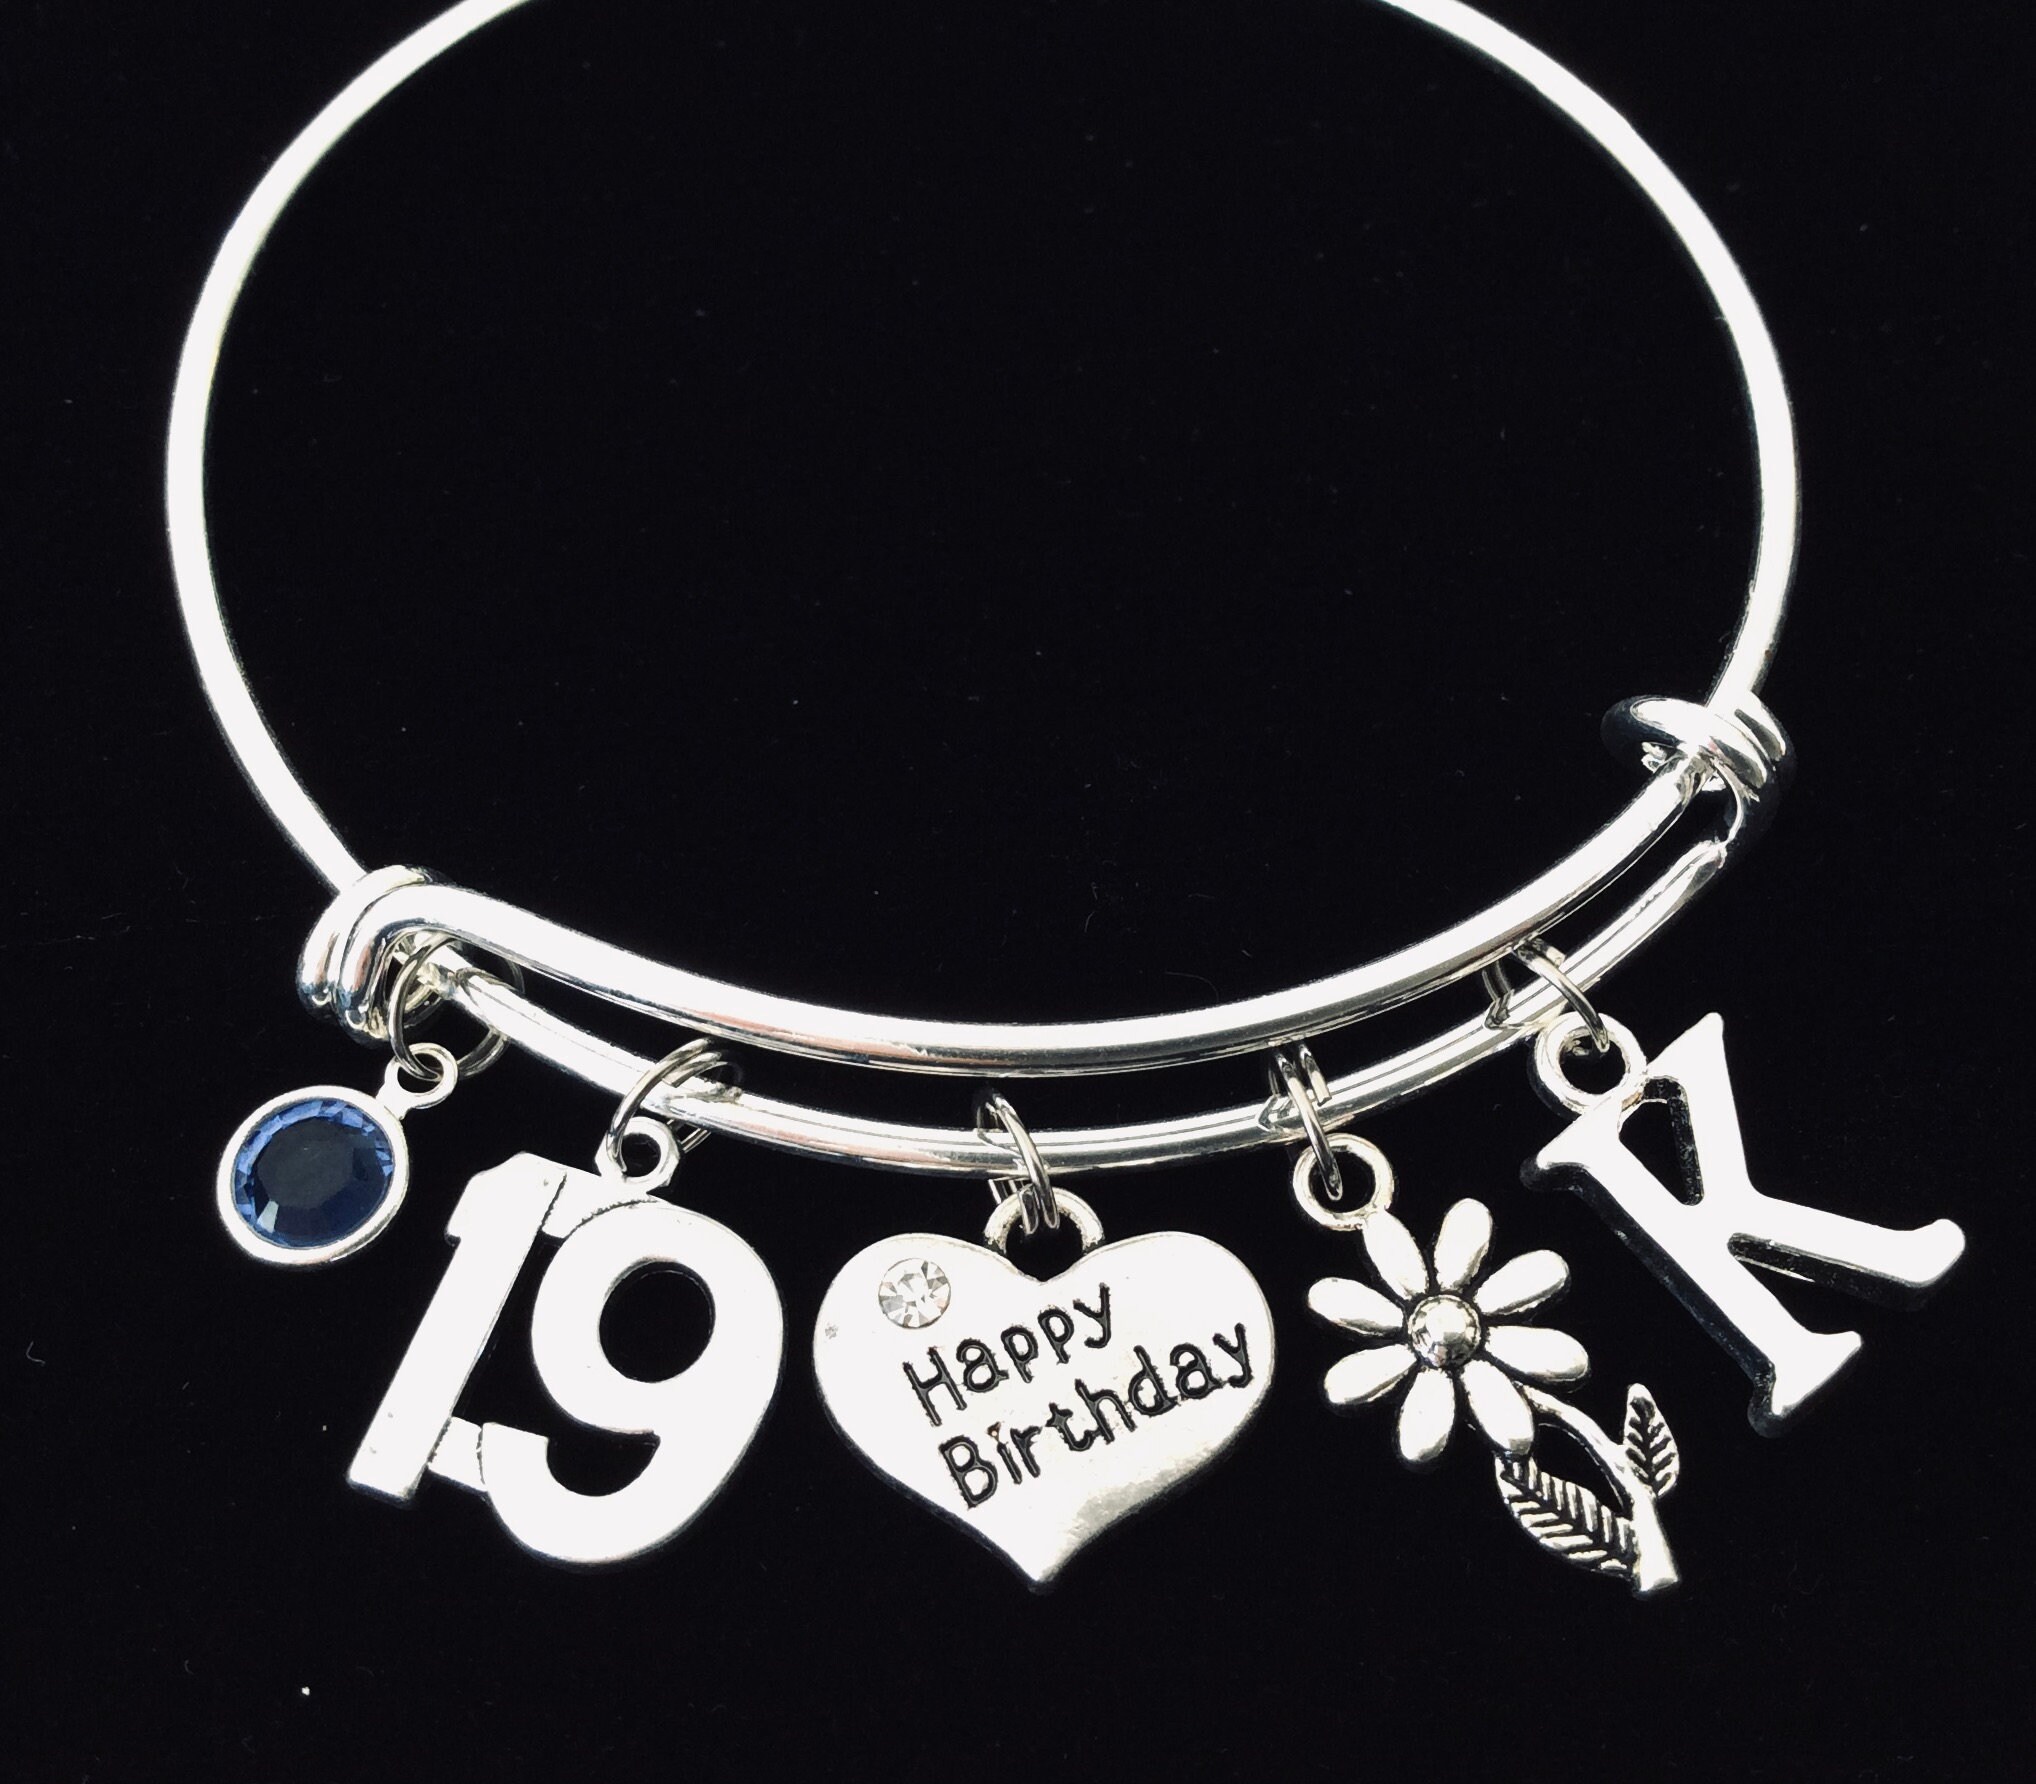 Iefshiny 19 Gifts for Girls Bracelet 19th Birthday Gifts for Girls Daughter Granddaughter Niece Teenage Girls, 19 Year Old Girl Gifts for Birthday